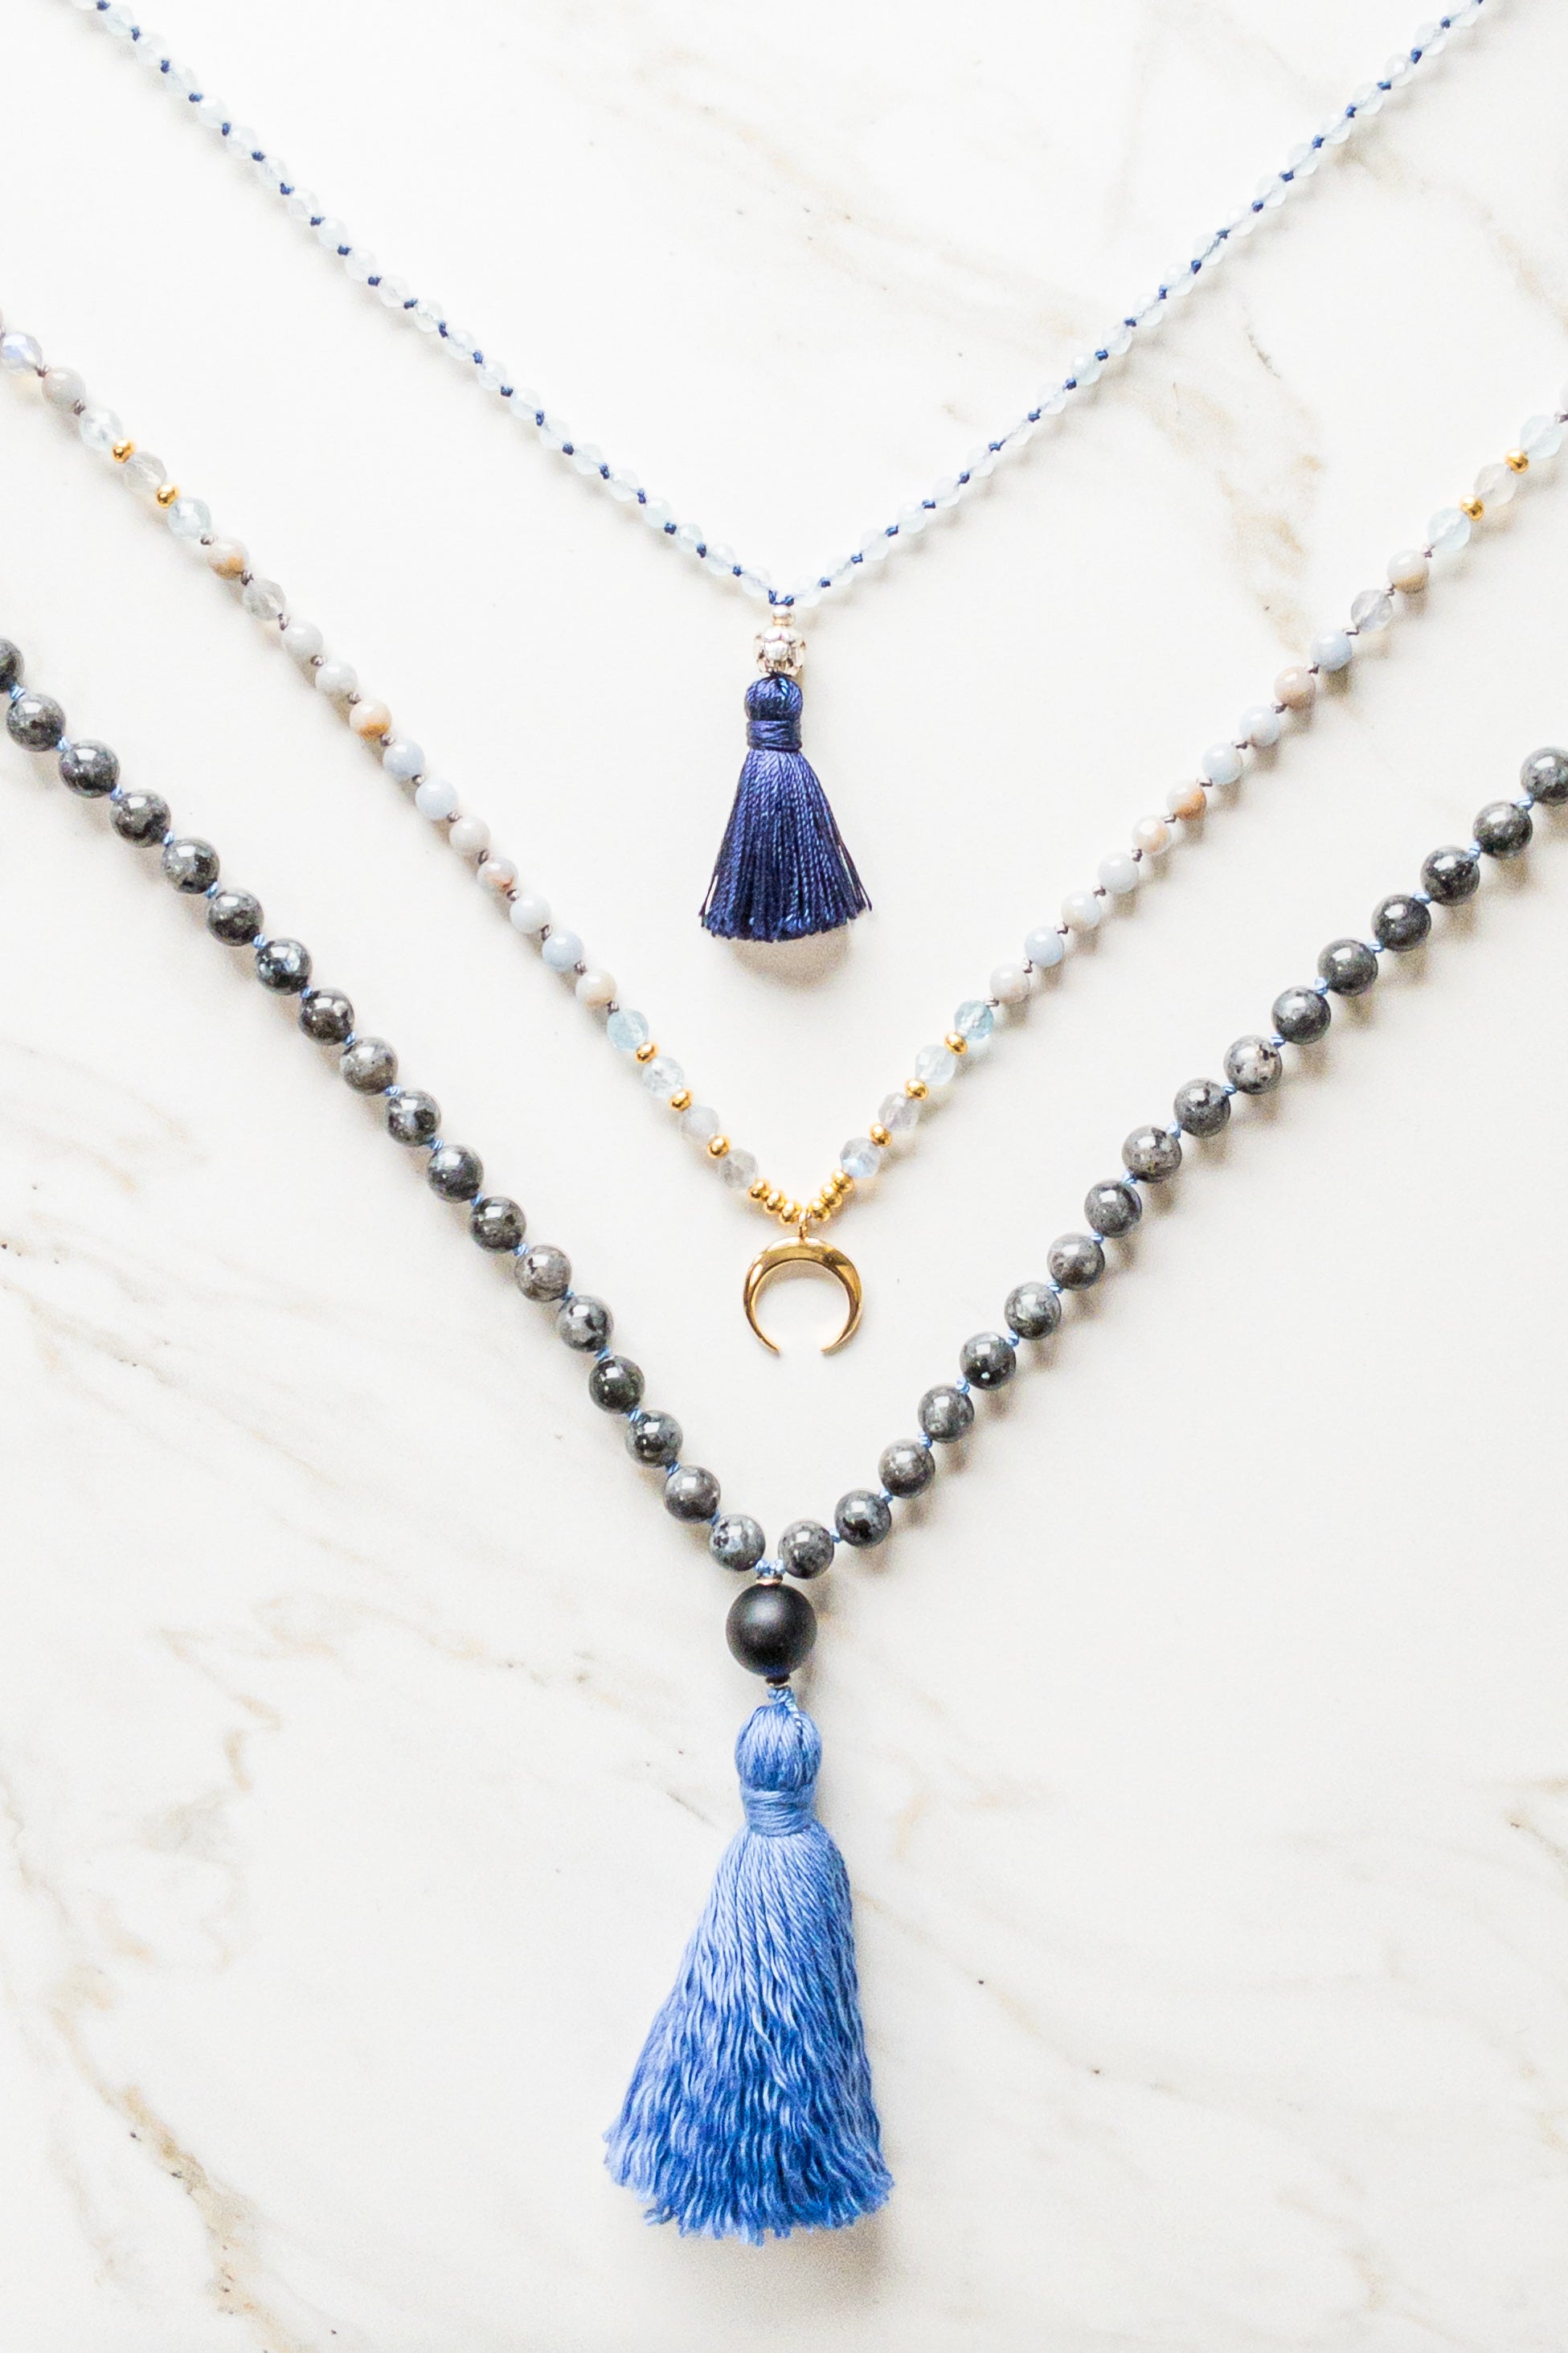 Shashā yoga jewellery Switzerland - blue Japamala 108 beads